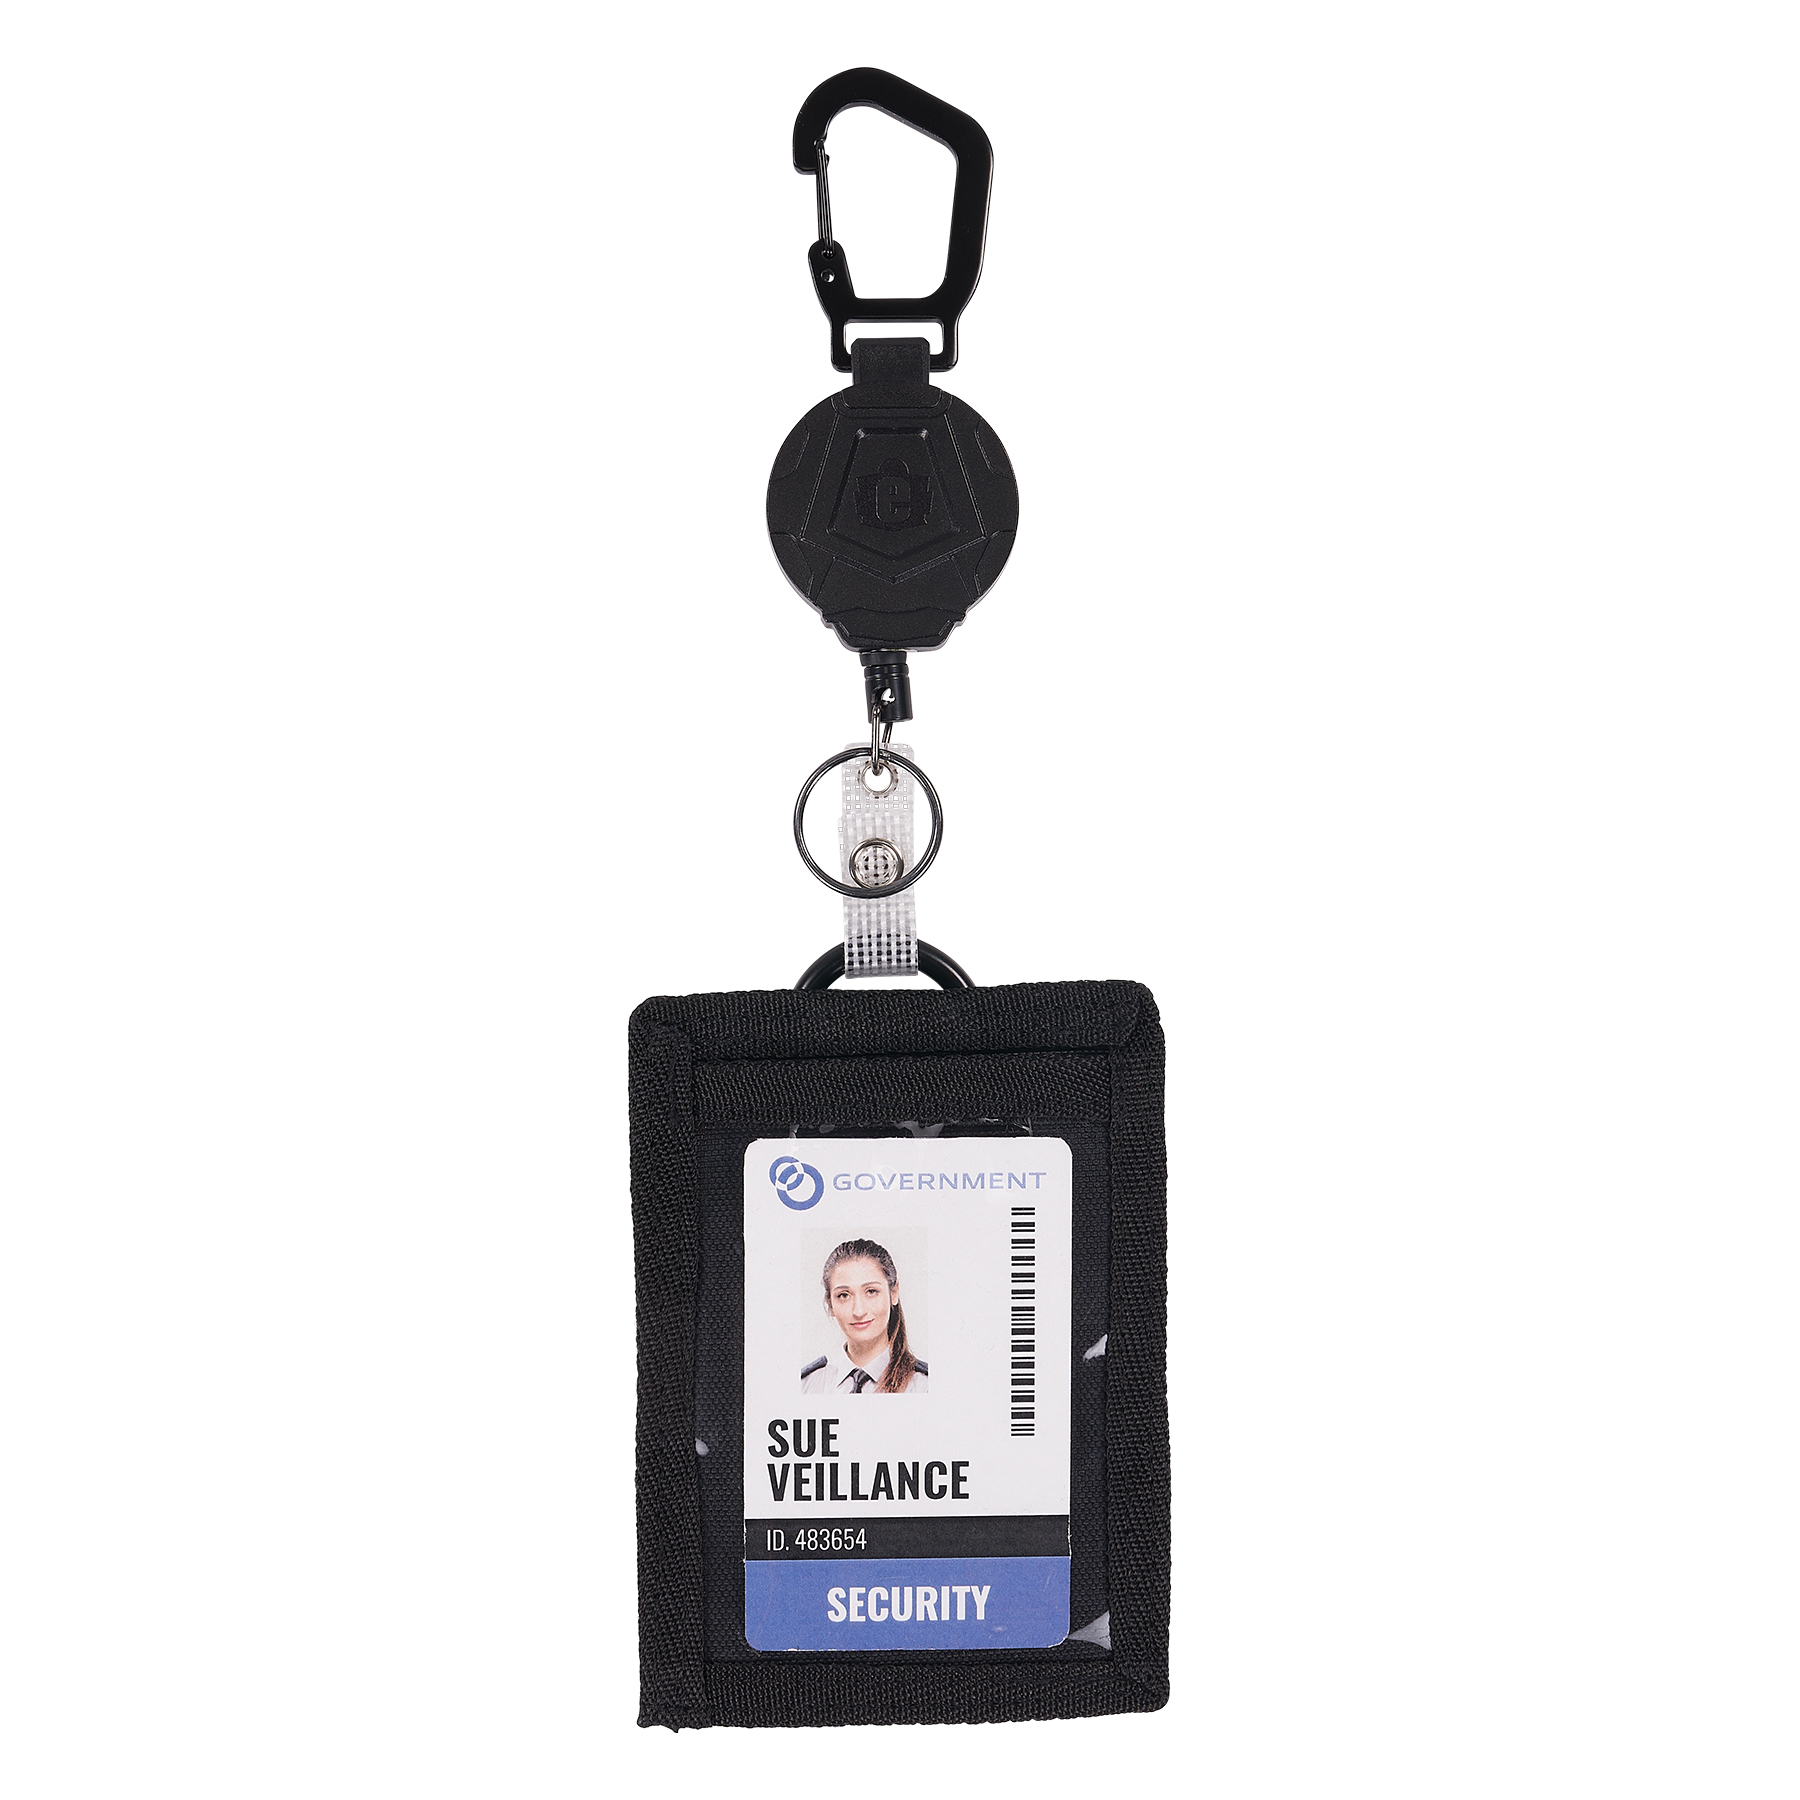 https://www.ergodyne.com/sites/default/files/product-images/19964-3389-wallet-id-badge-holder-attached-to-badge-reel.jpg